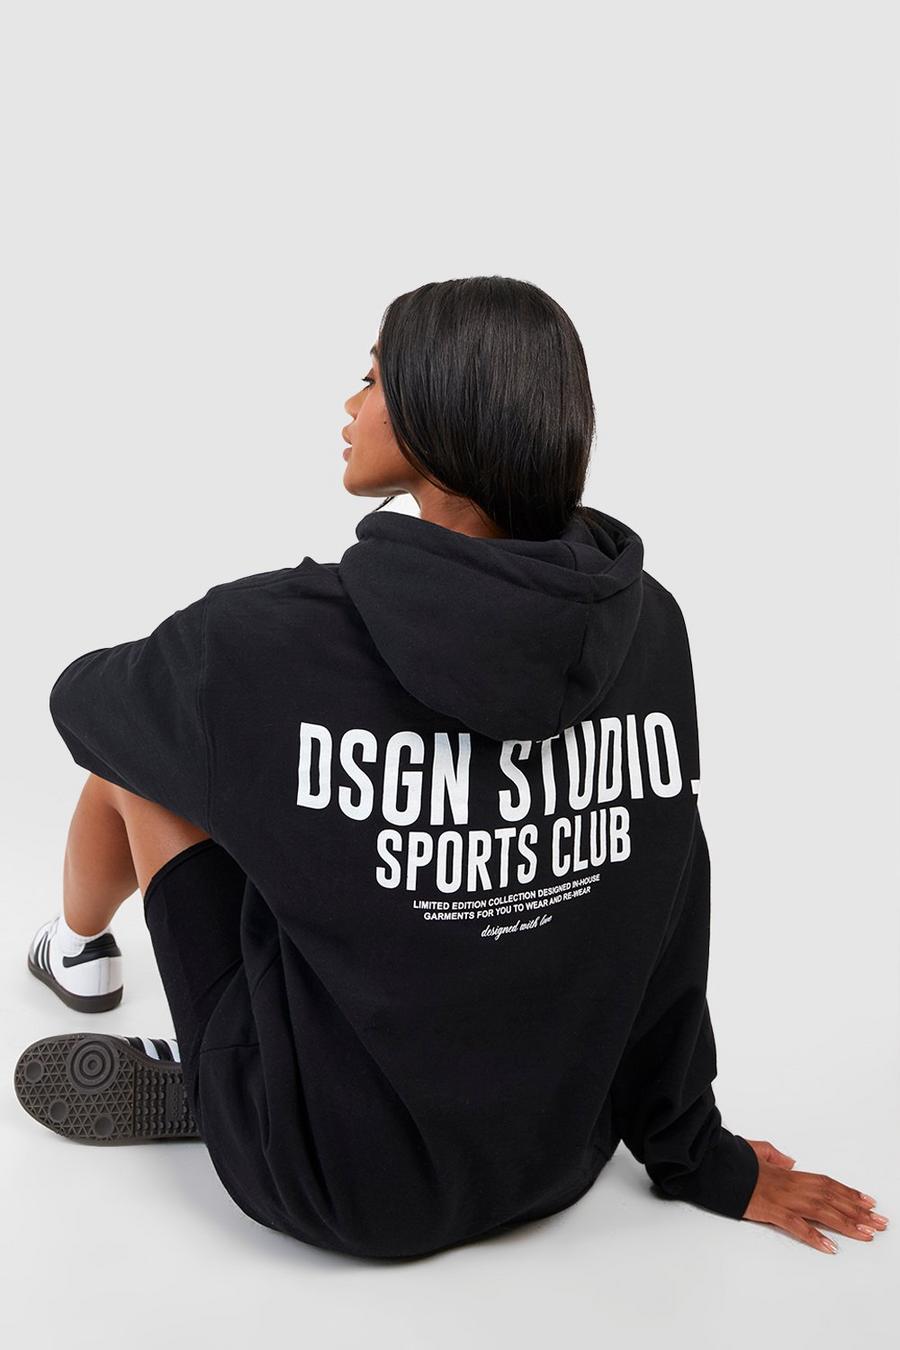 Oversize Hoodie mit Dsgn Studio Sports Club Slogan, Black